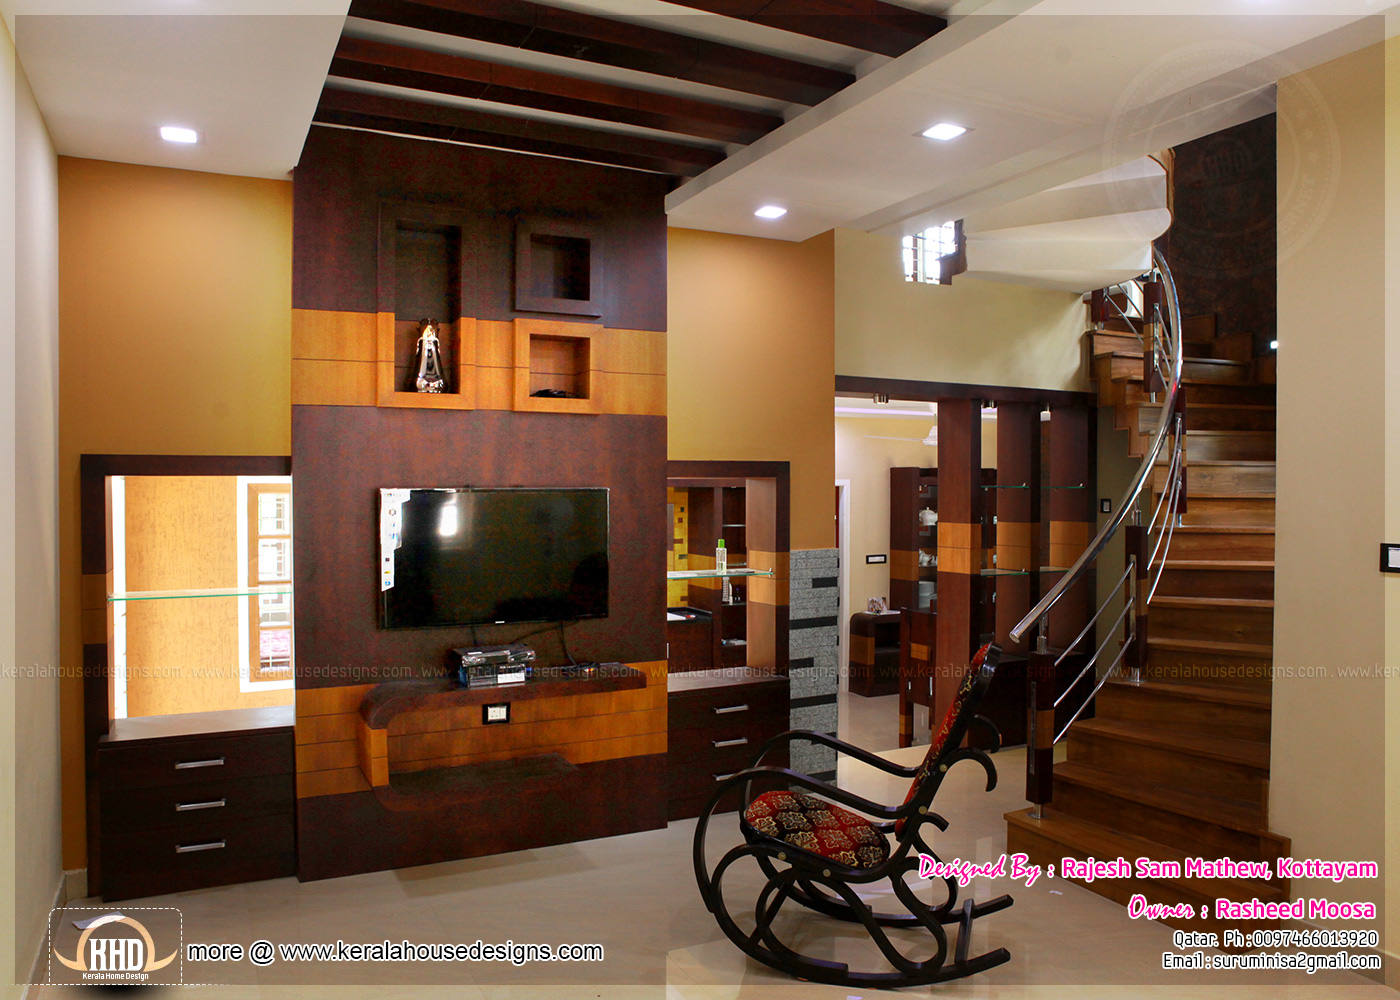 Kerala interior design with photos - Kerala home design and floor ...  ... interior Living room ...